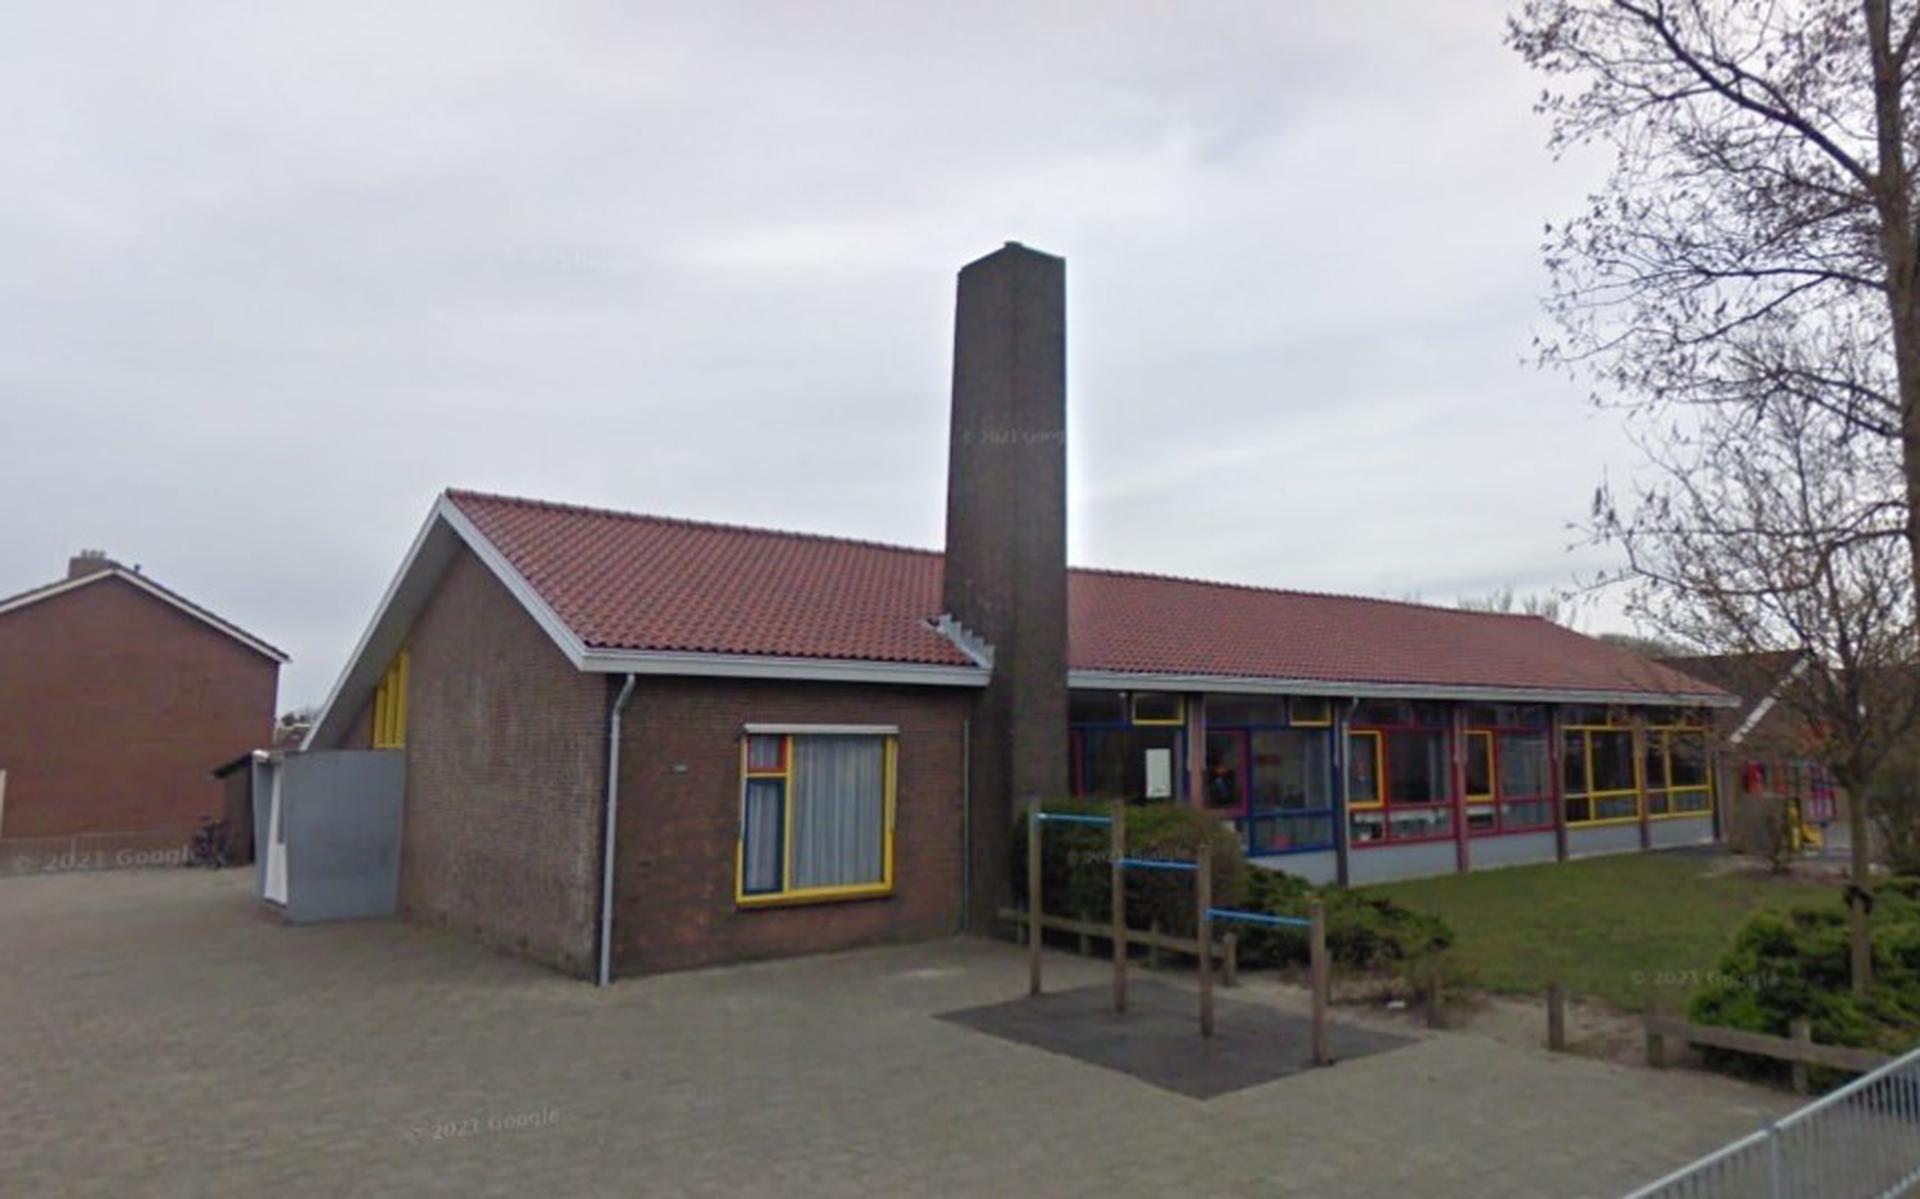 Basisschool 't Kompas in Paesens. Foto: Google Streetview